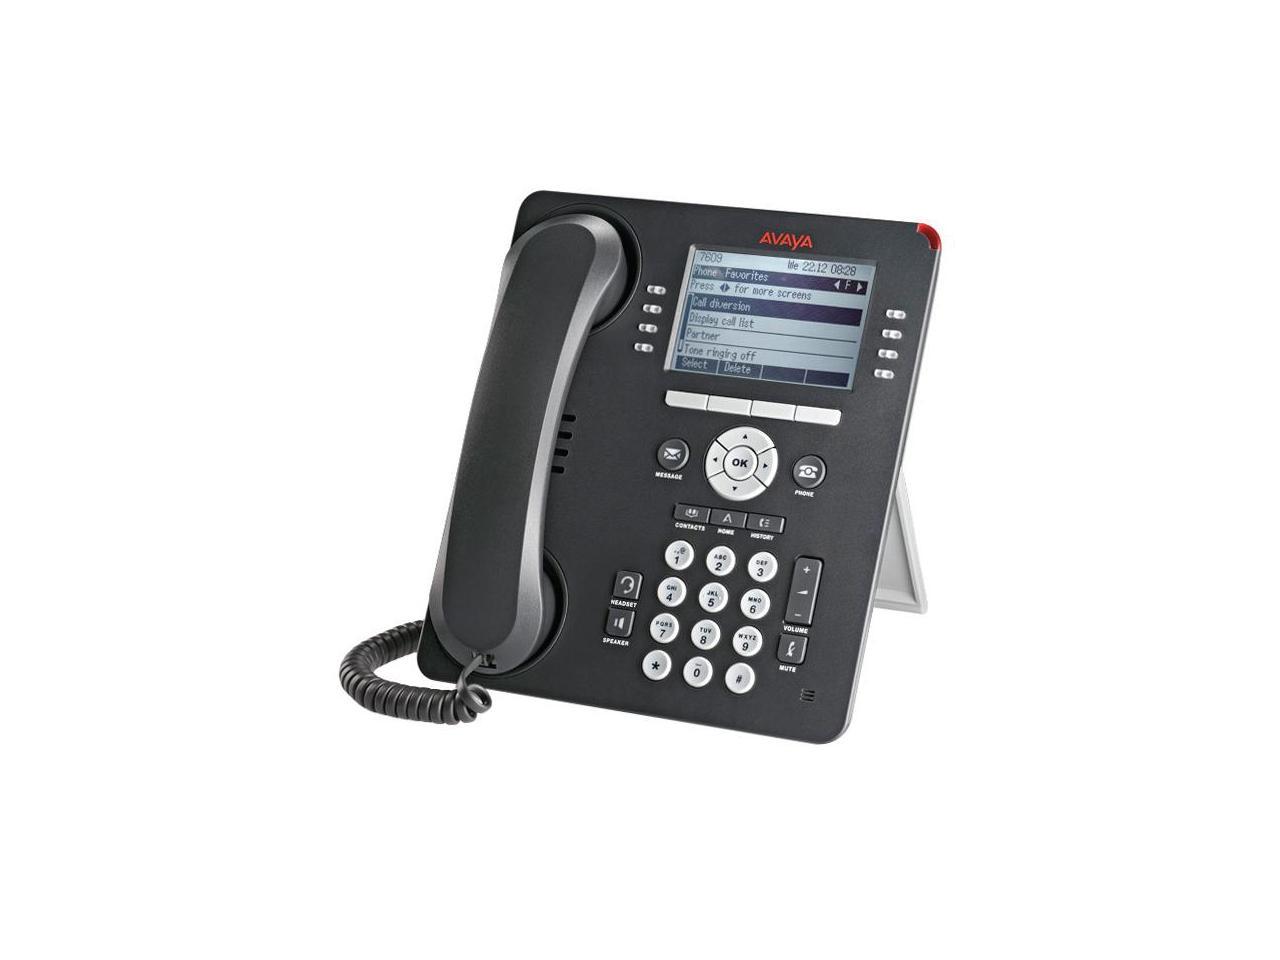 NEW Avaya 9508 Global Digital Phone with Icon Keys 700504842 